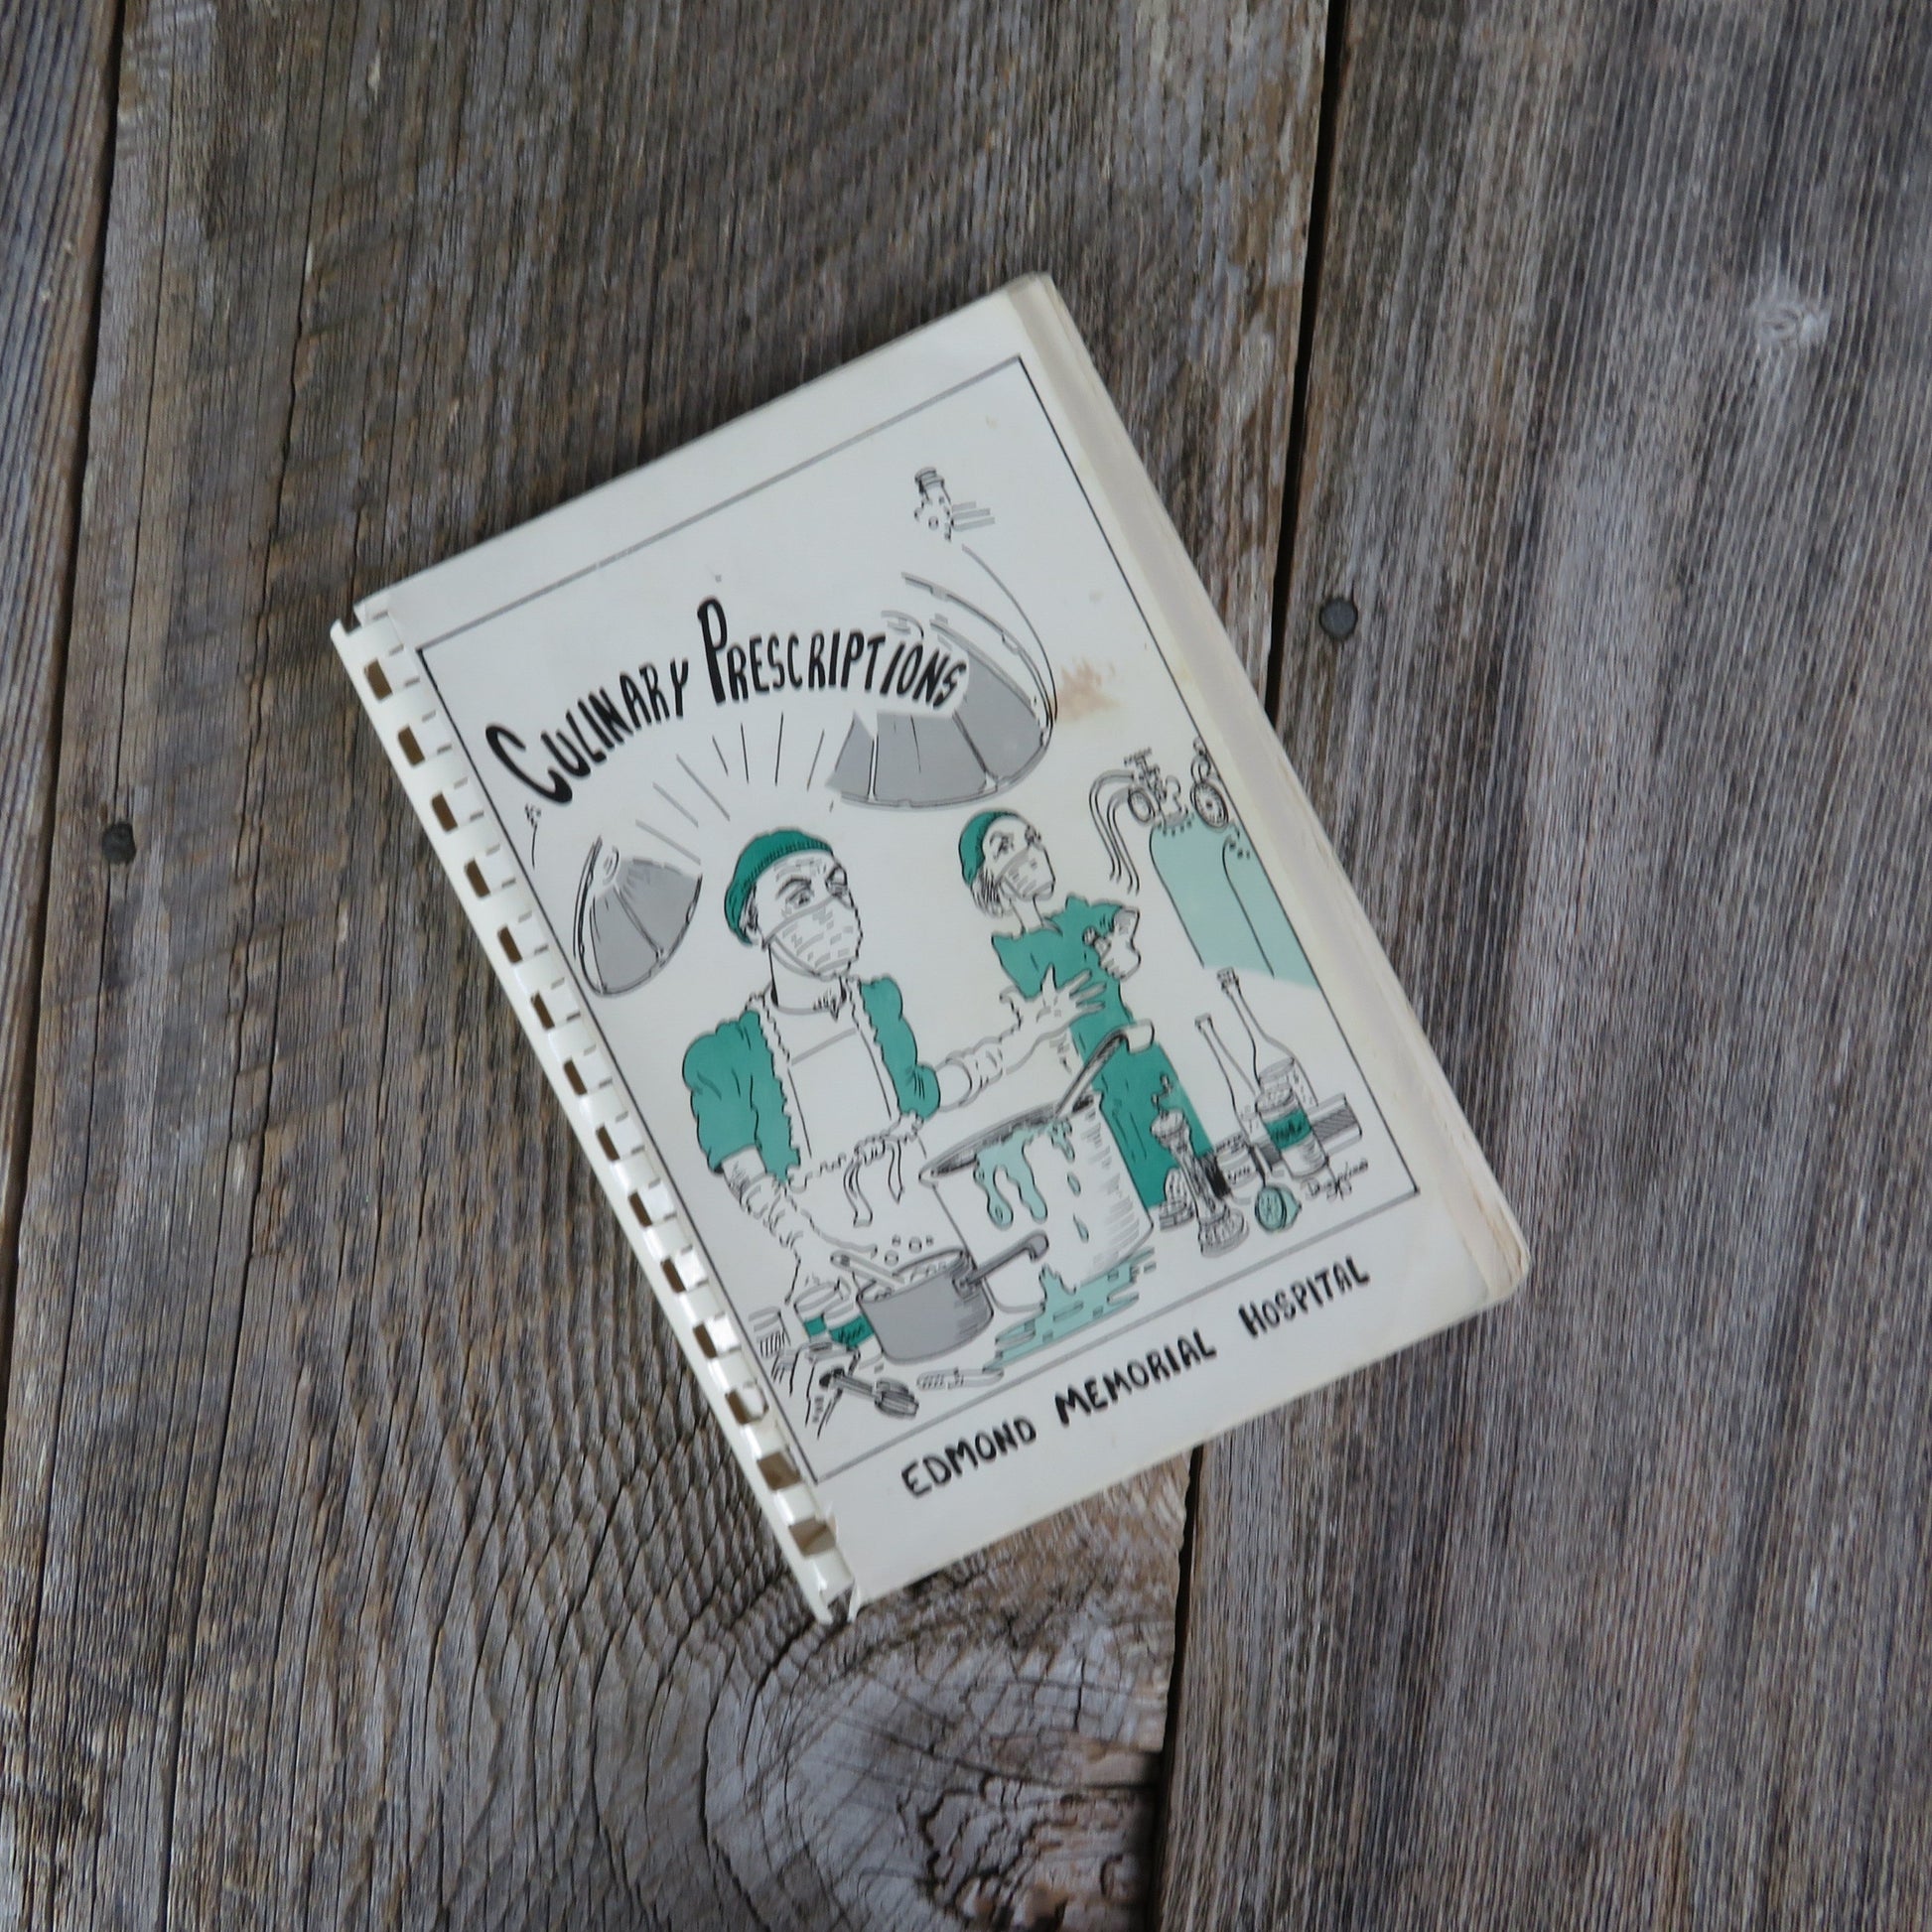 Vintage Oklahoma Cookbook Edmond Memorial Hospital Culinary Prescriptions 1980 - At Grandma's Table